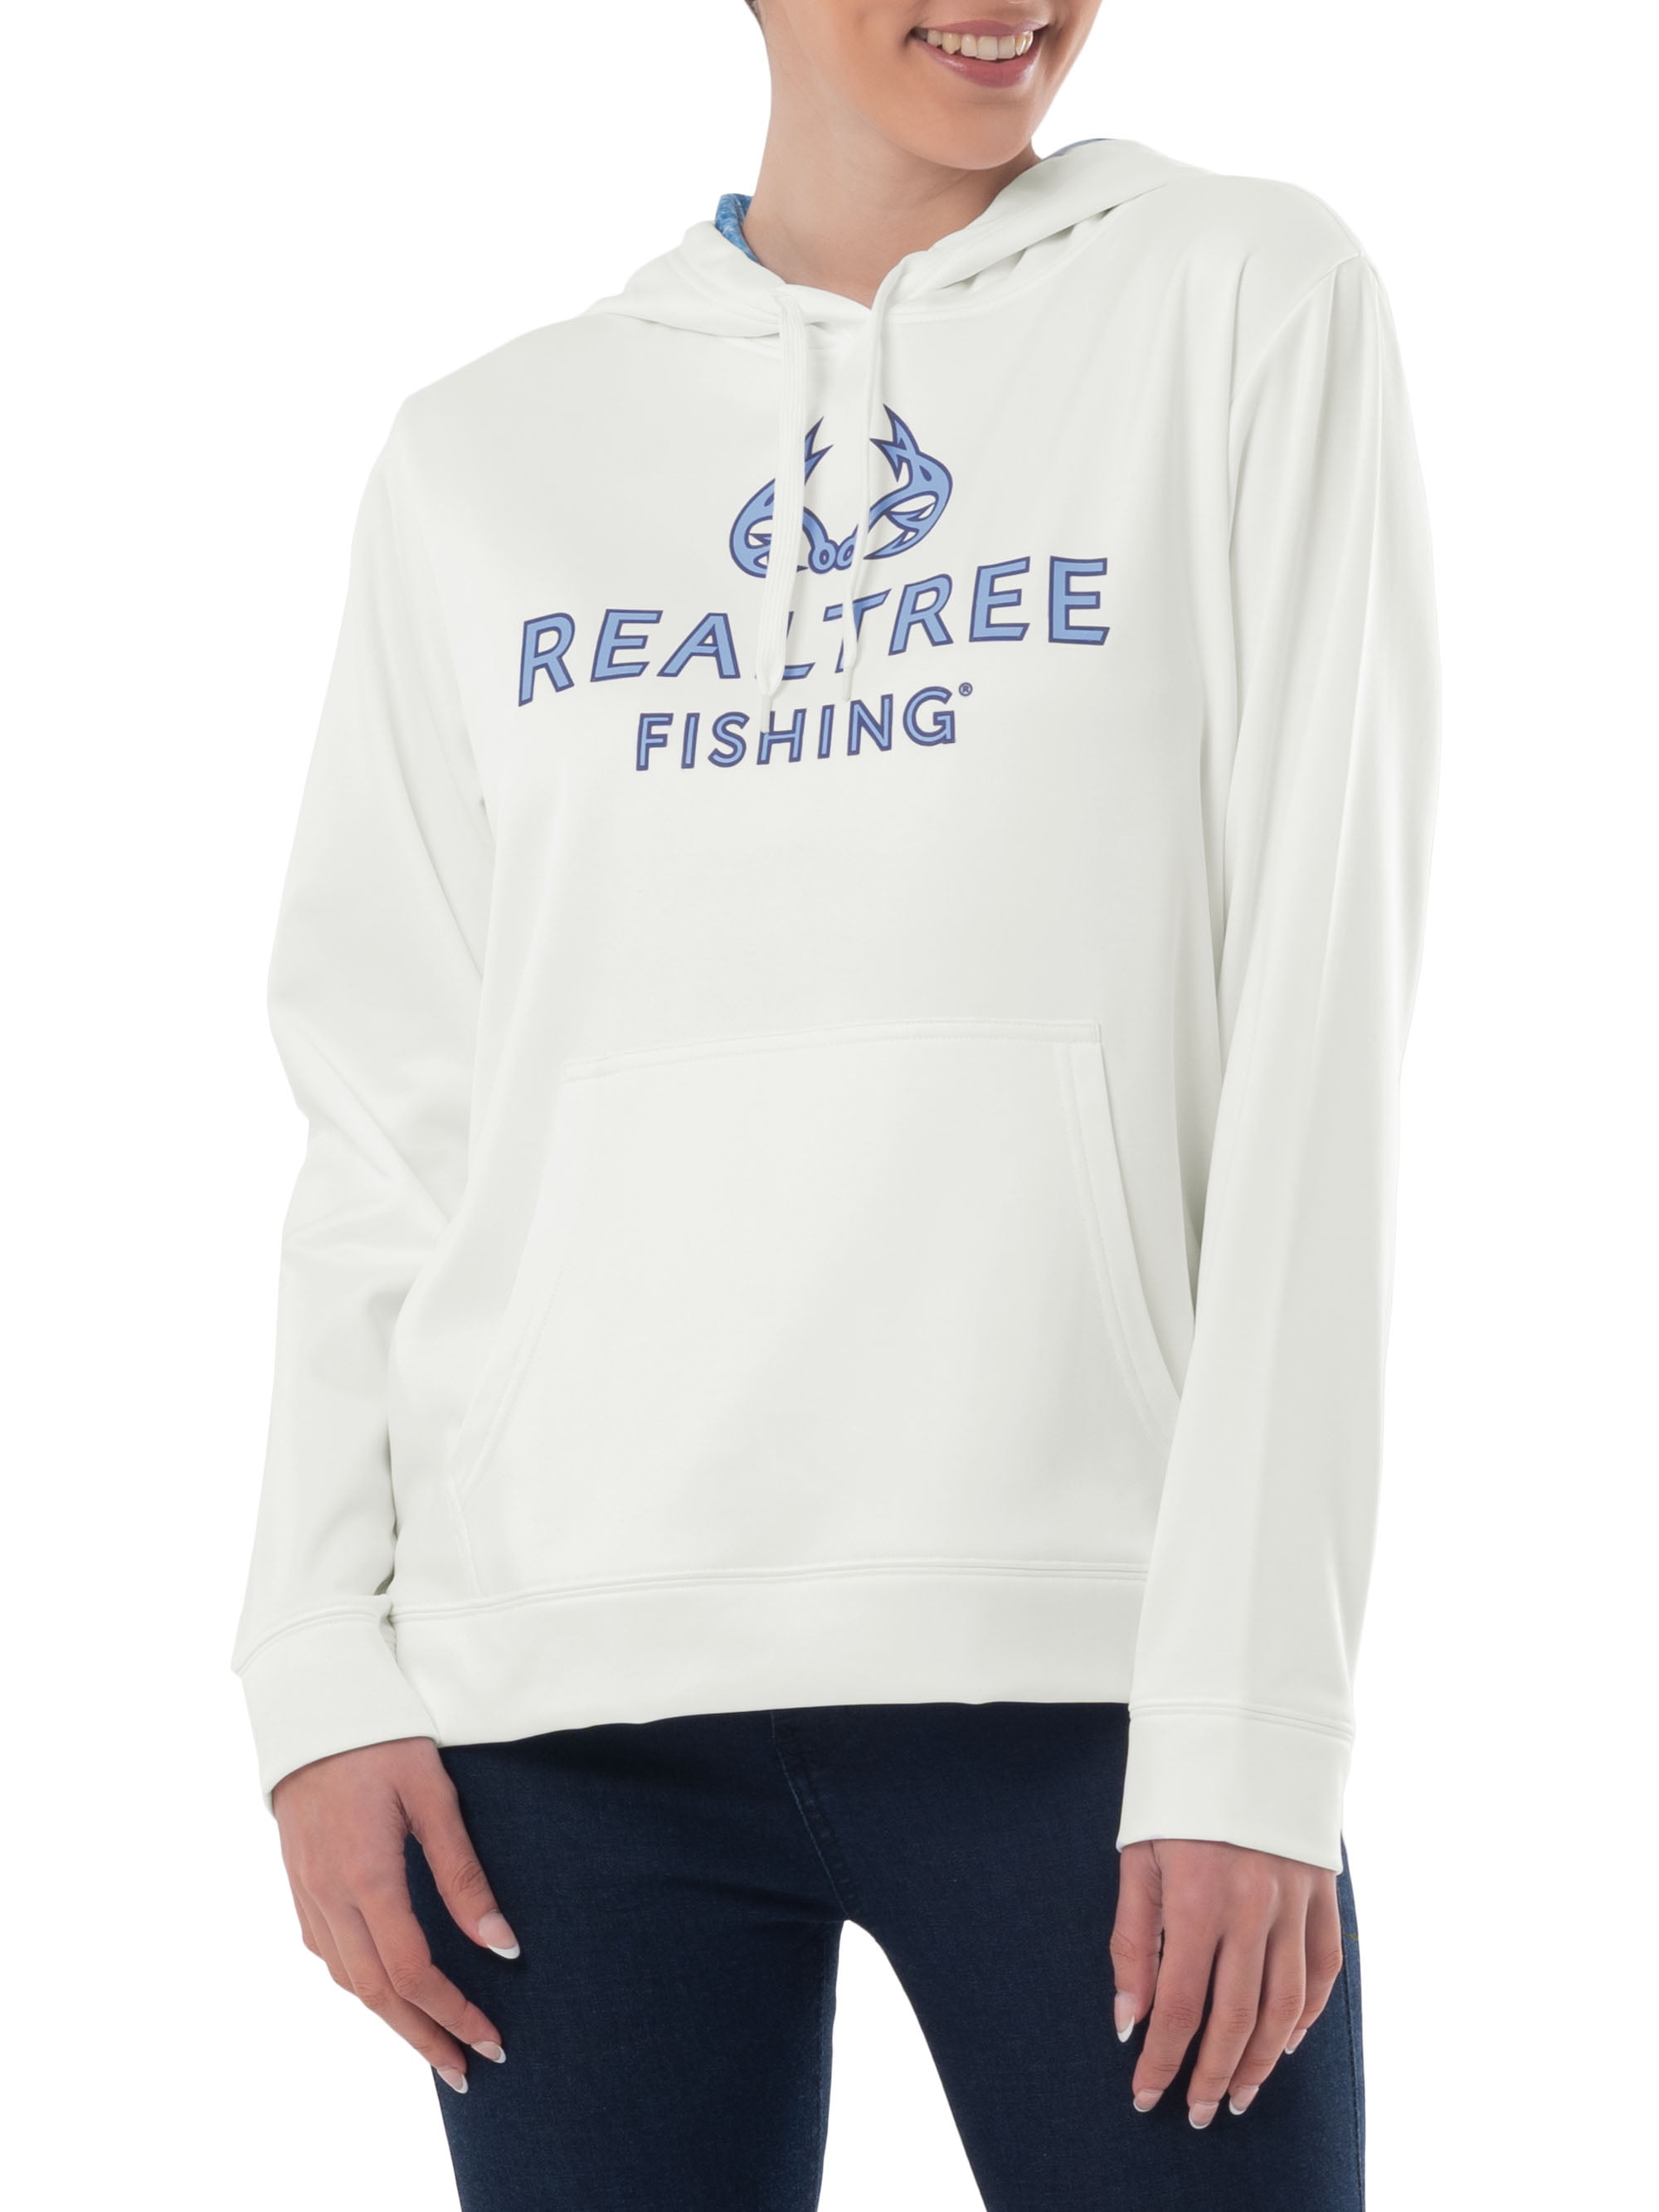 Realtree Women's Fishing Performance Hoodie, Size: Medium, White